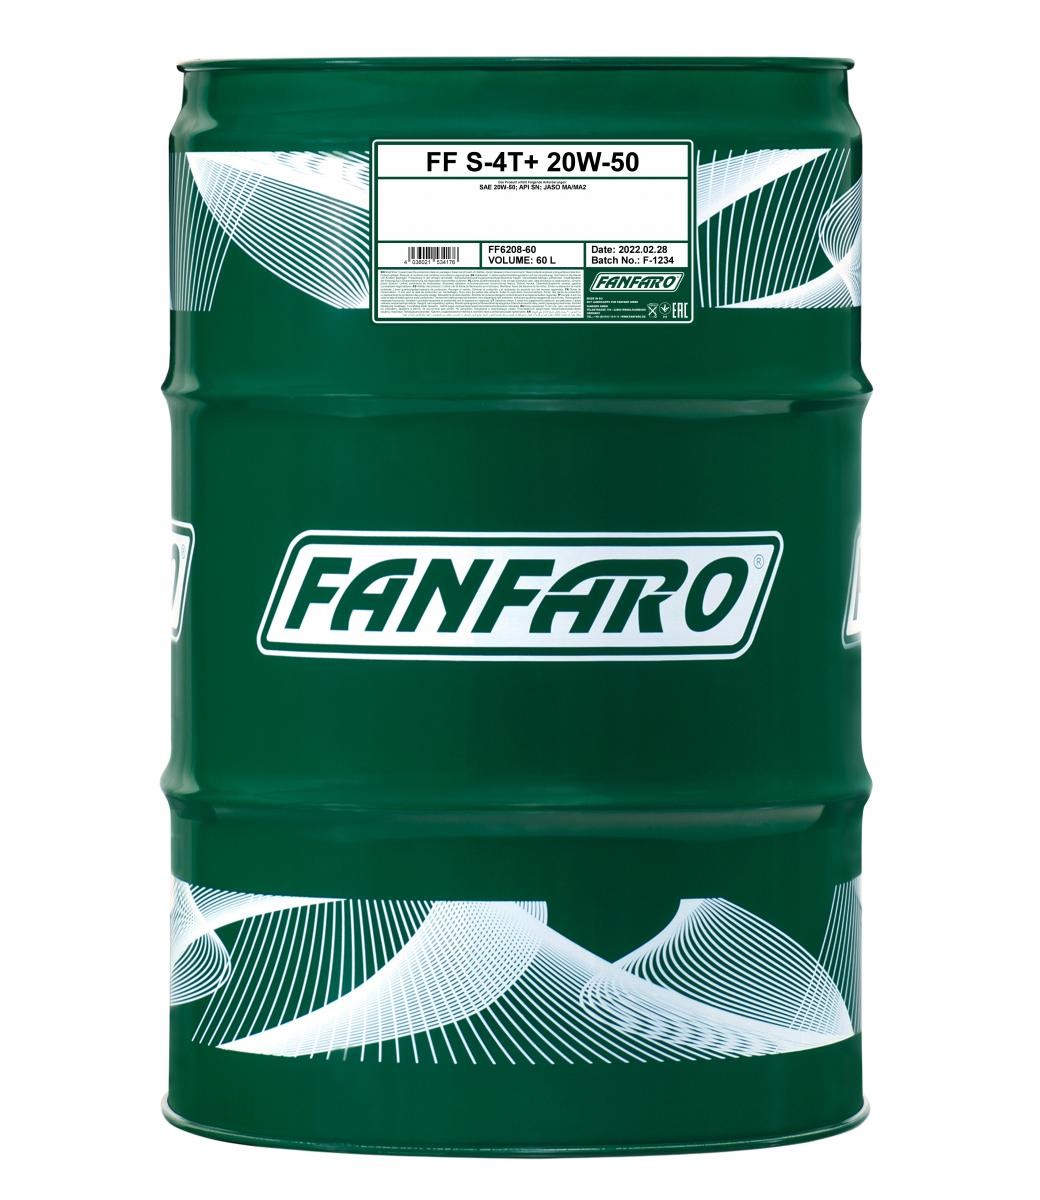 Olio motore FF6208-60 di FANFARO